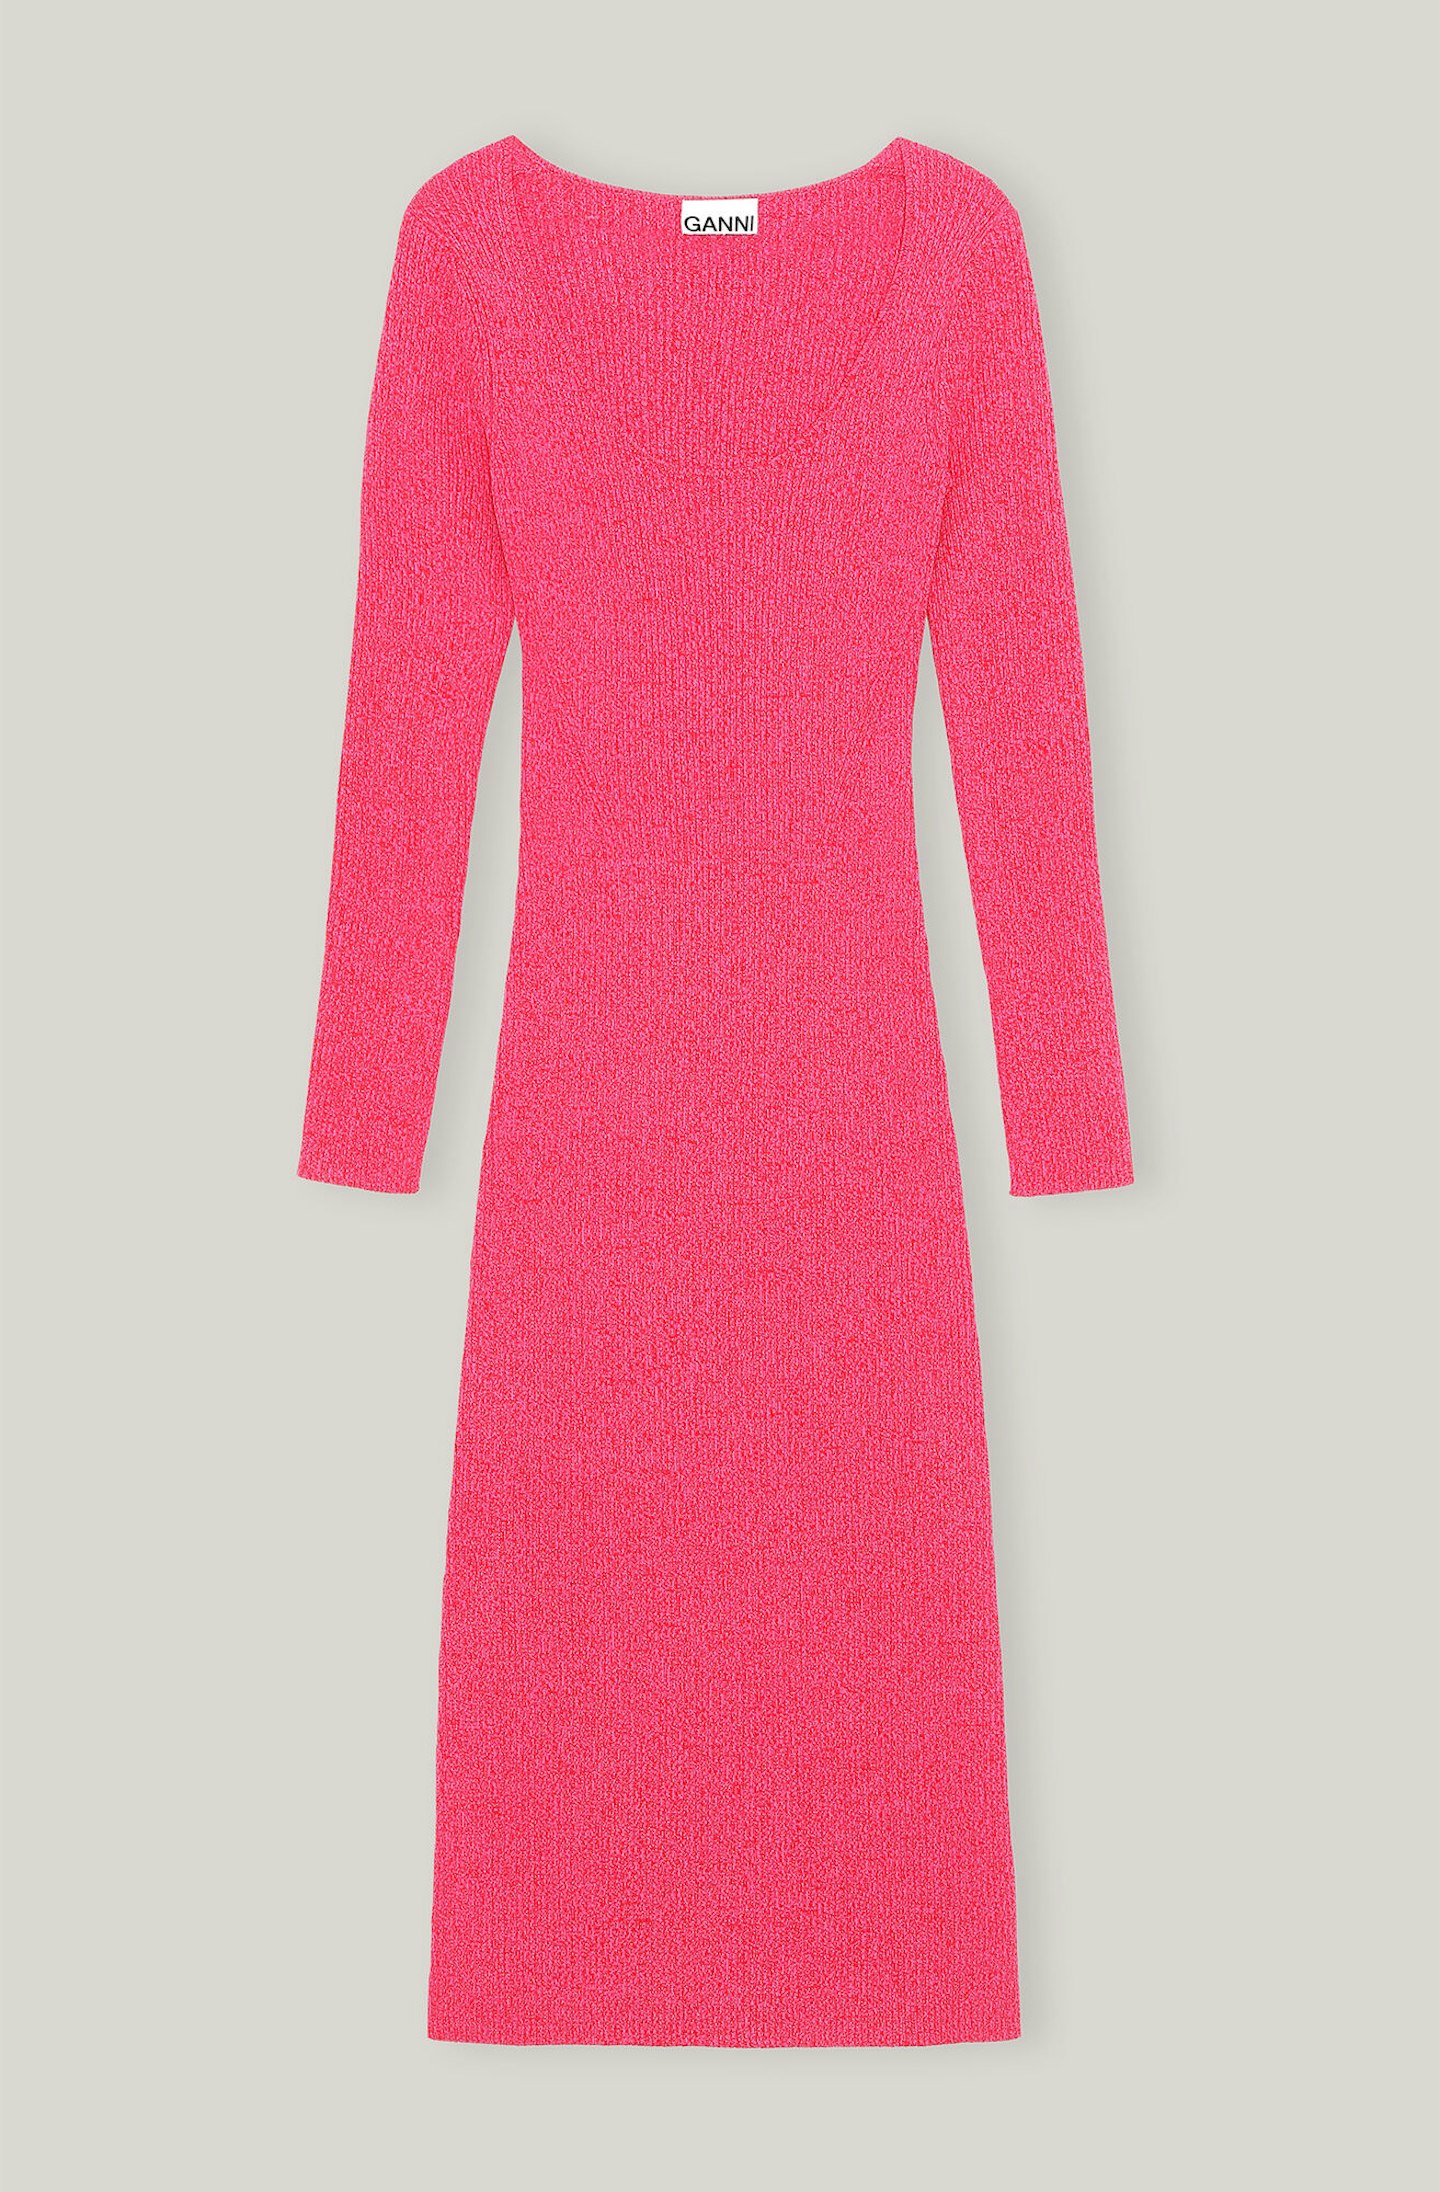 Ganni, Knit Bodycon Midi Dress, £195